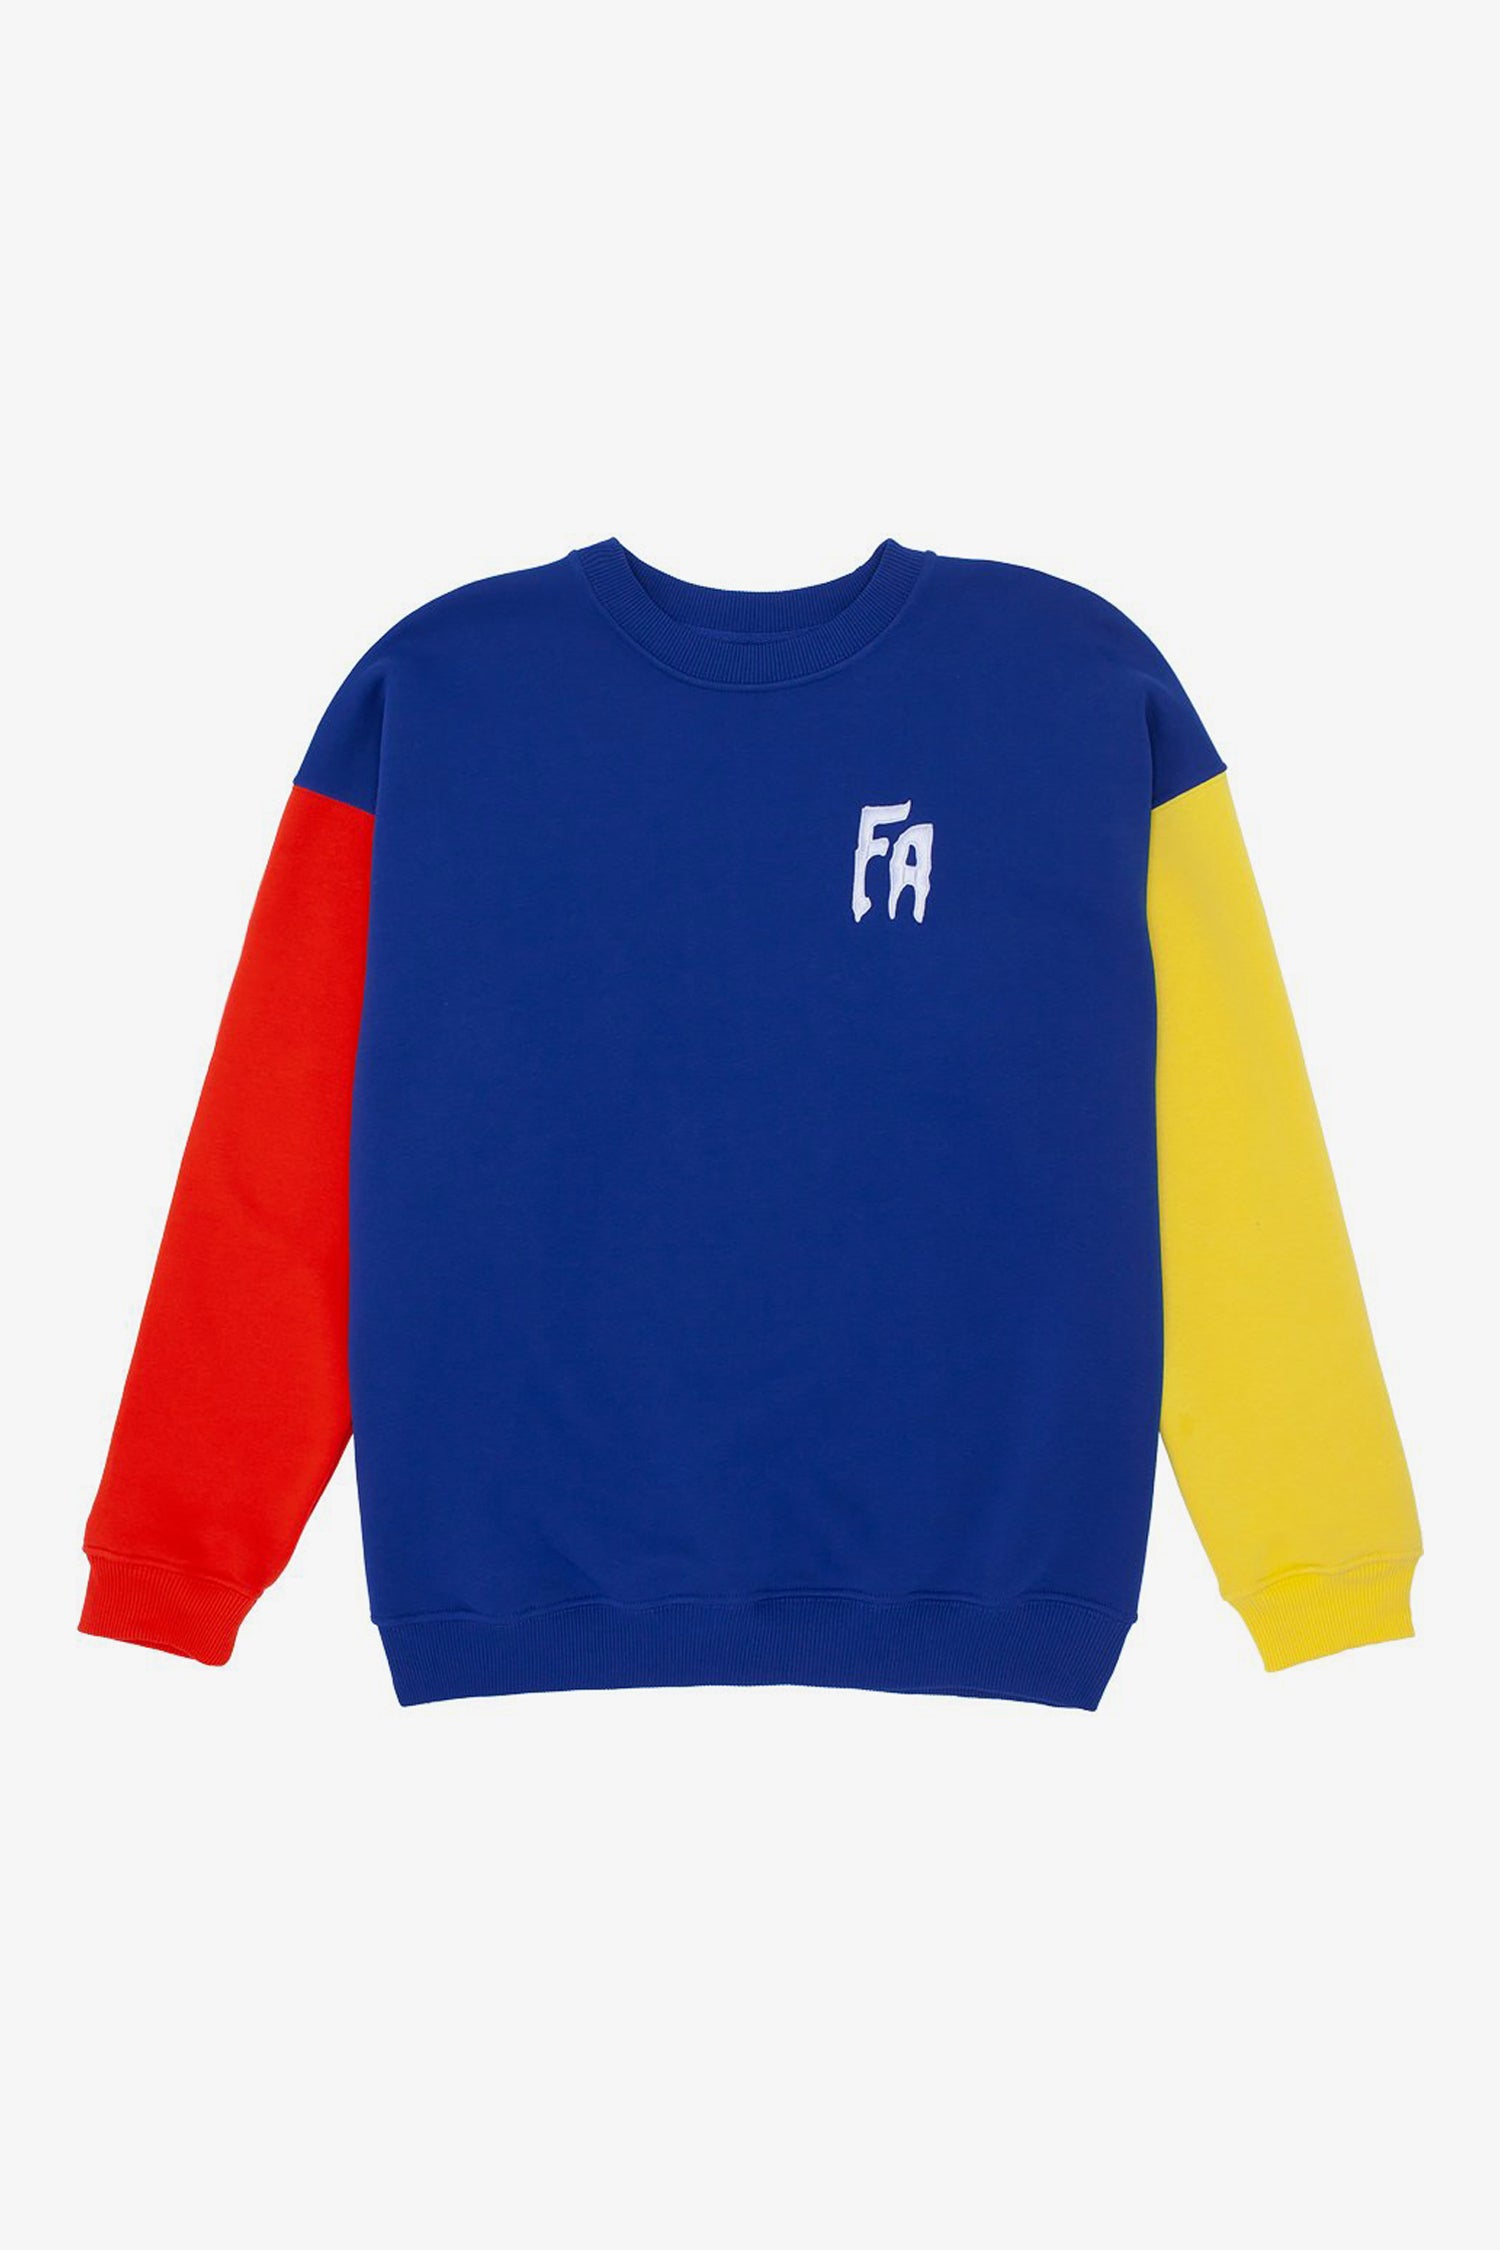 Selectshop FRAME - FUCKING AWESOME FA Primary Crewneck Sweatshirt Sweats-Knits Dubai